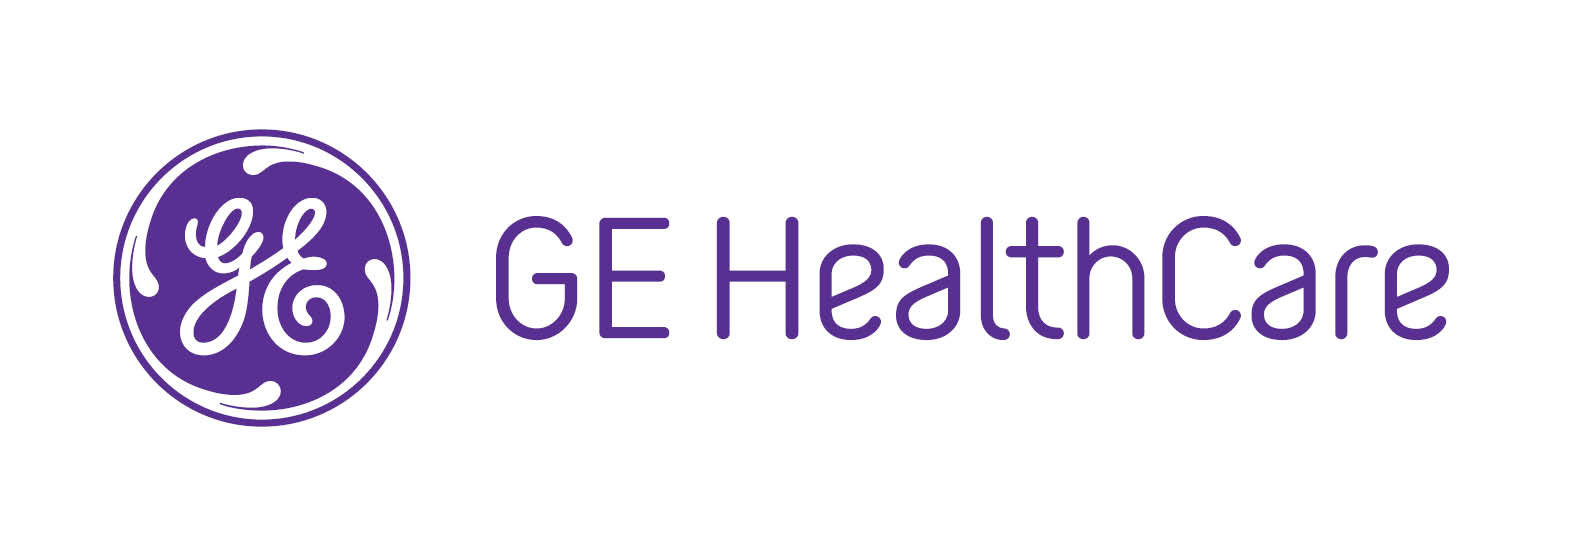 Logo of GE HealthCare 